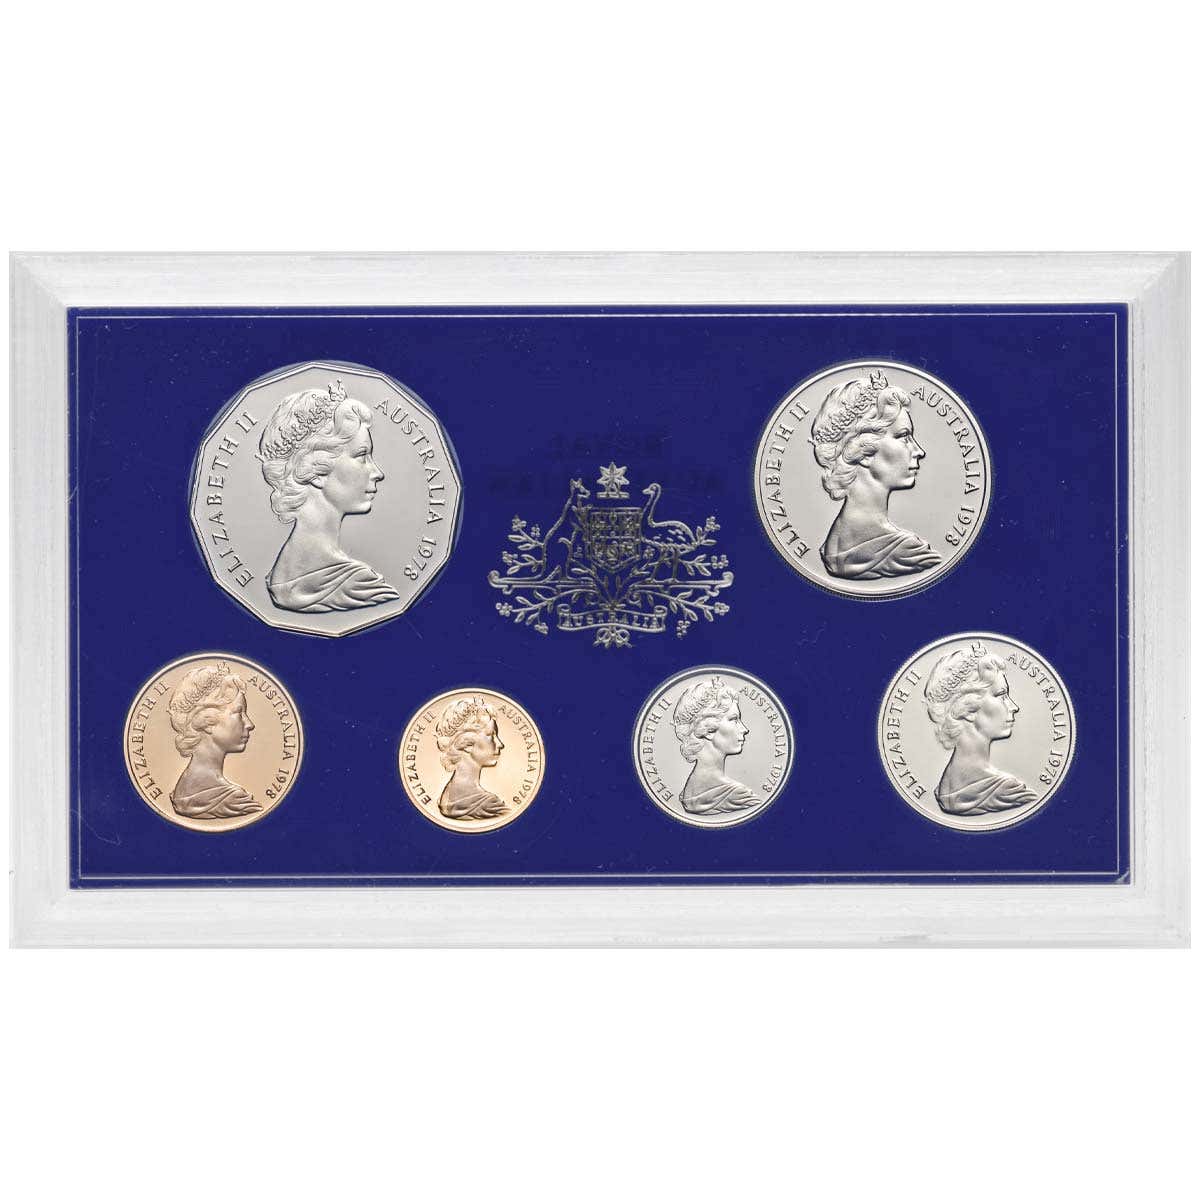 Australia 1978 6-Coin Proof Set